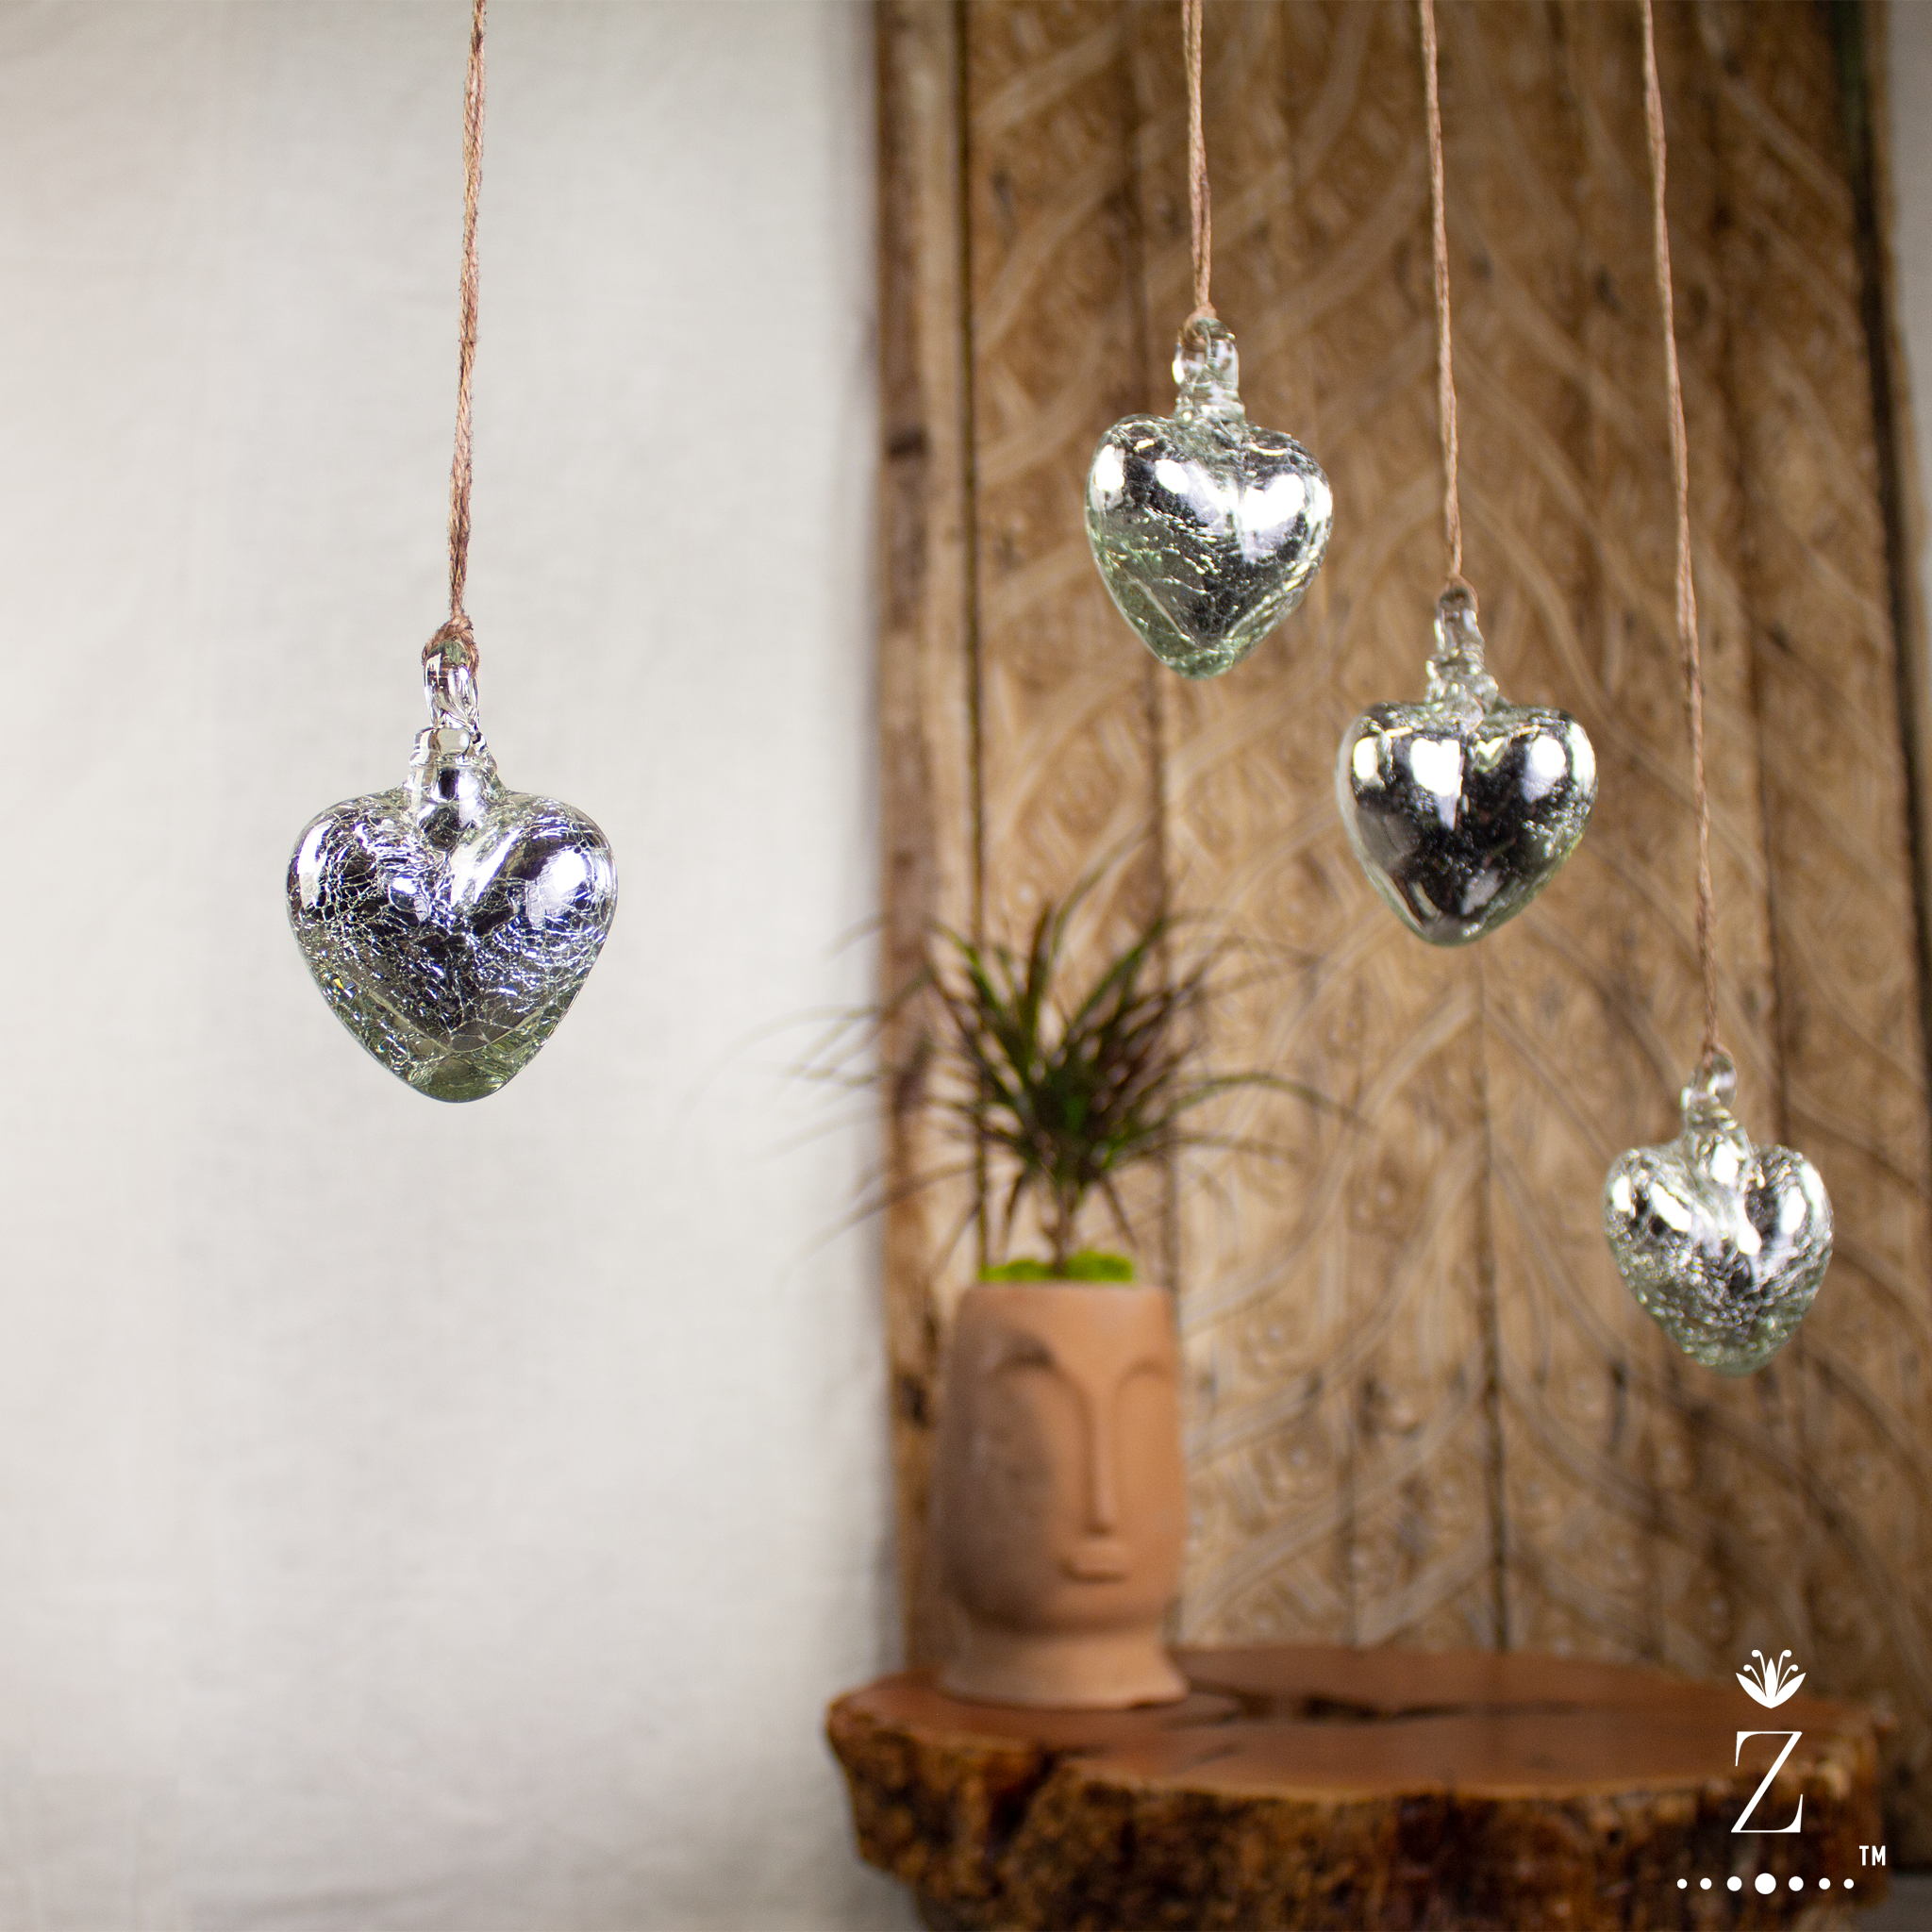 Vestige Heart, Mercury Glass. Small glass heart ornament.